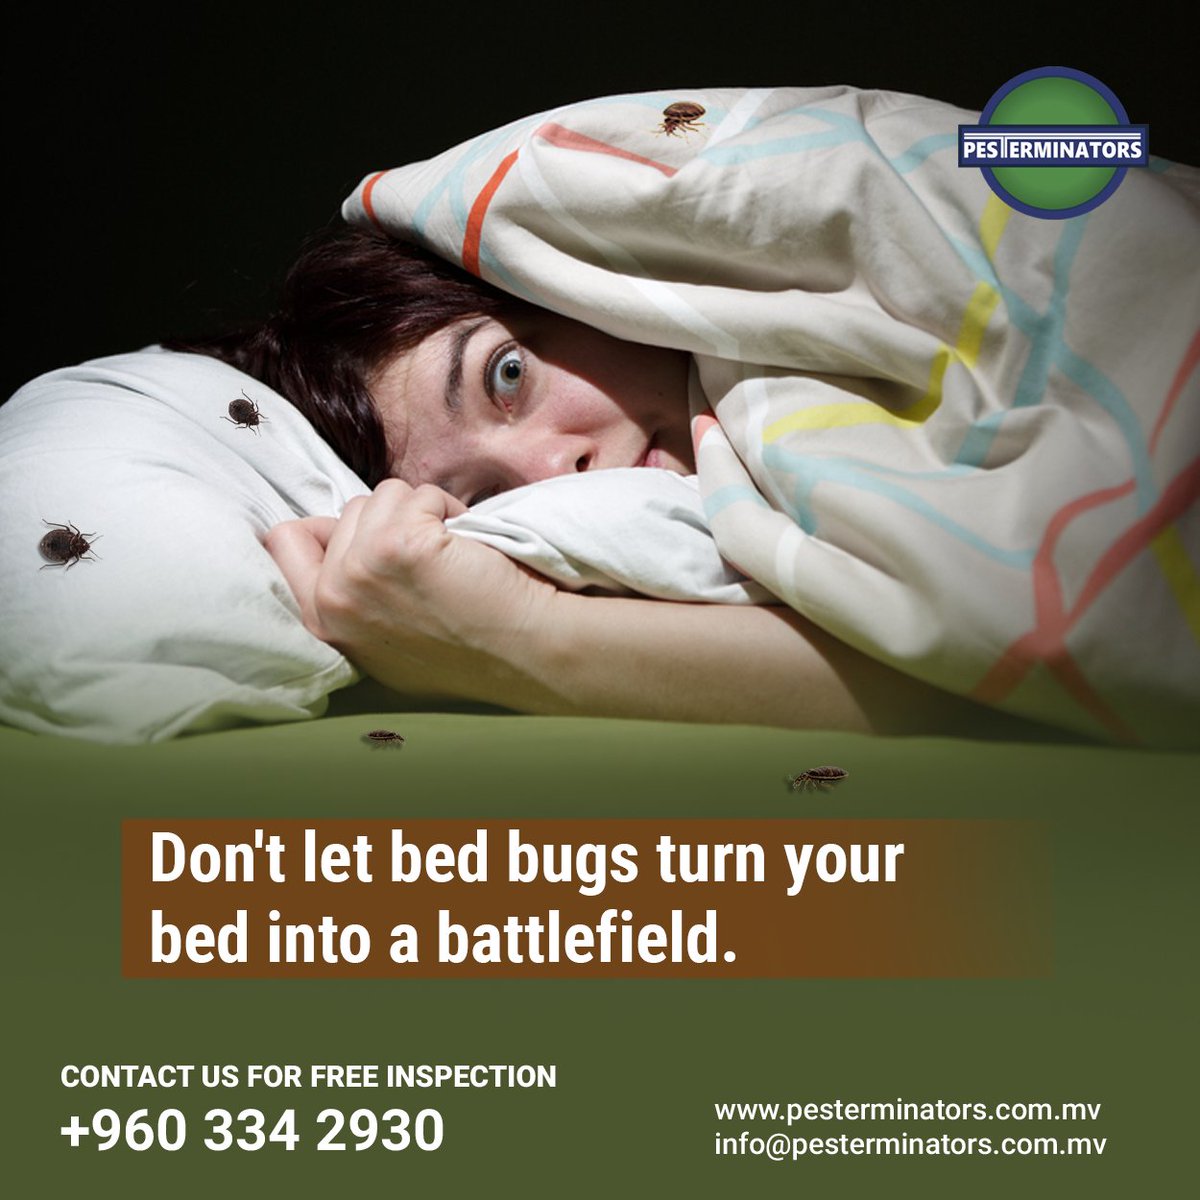 Don't let bed bugs turn your bed into a battlefield. 

Contact us +960 3342930

#Maldives #maldivesresorts #SunnySideOfLife #PestControl #Pesterminators #ResortLife #BedBugControl #PestManagement  #BedBugRemoval #ProfessionalServices #EffectiveTreatments #SayNoToBedBugs